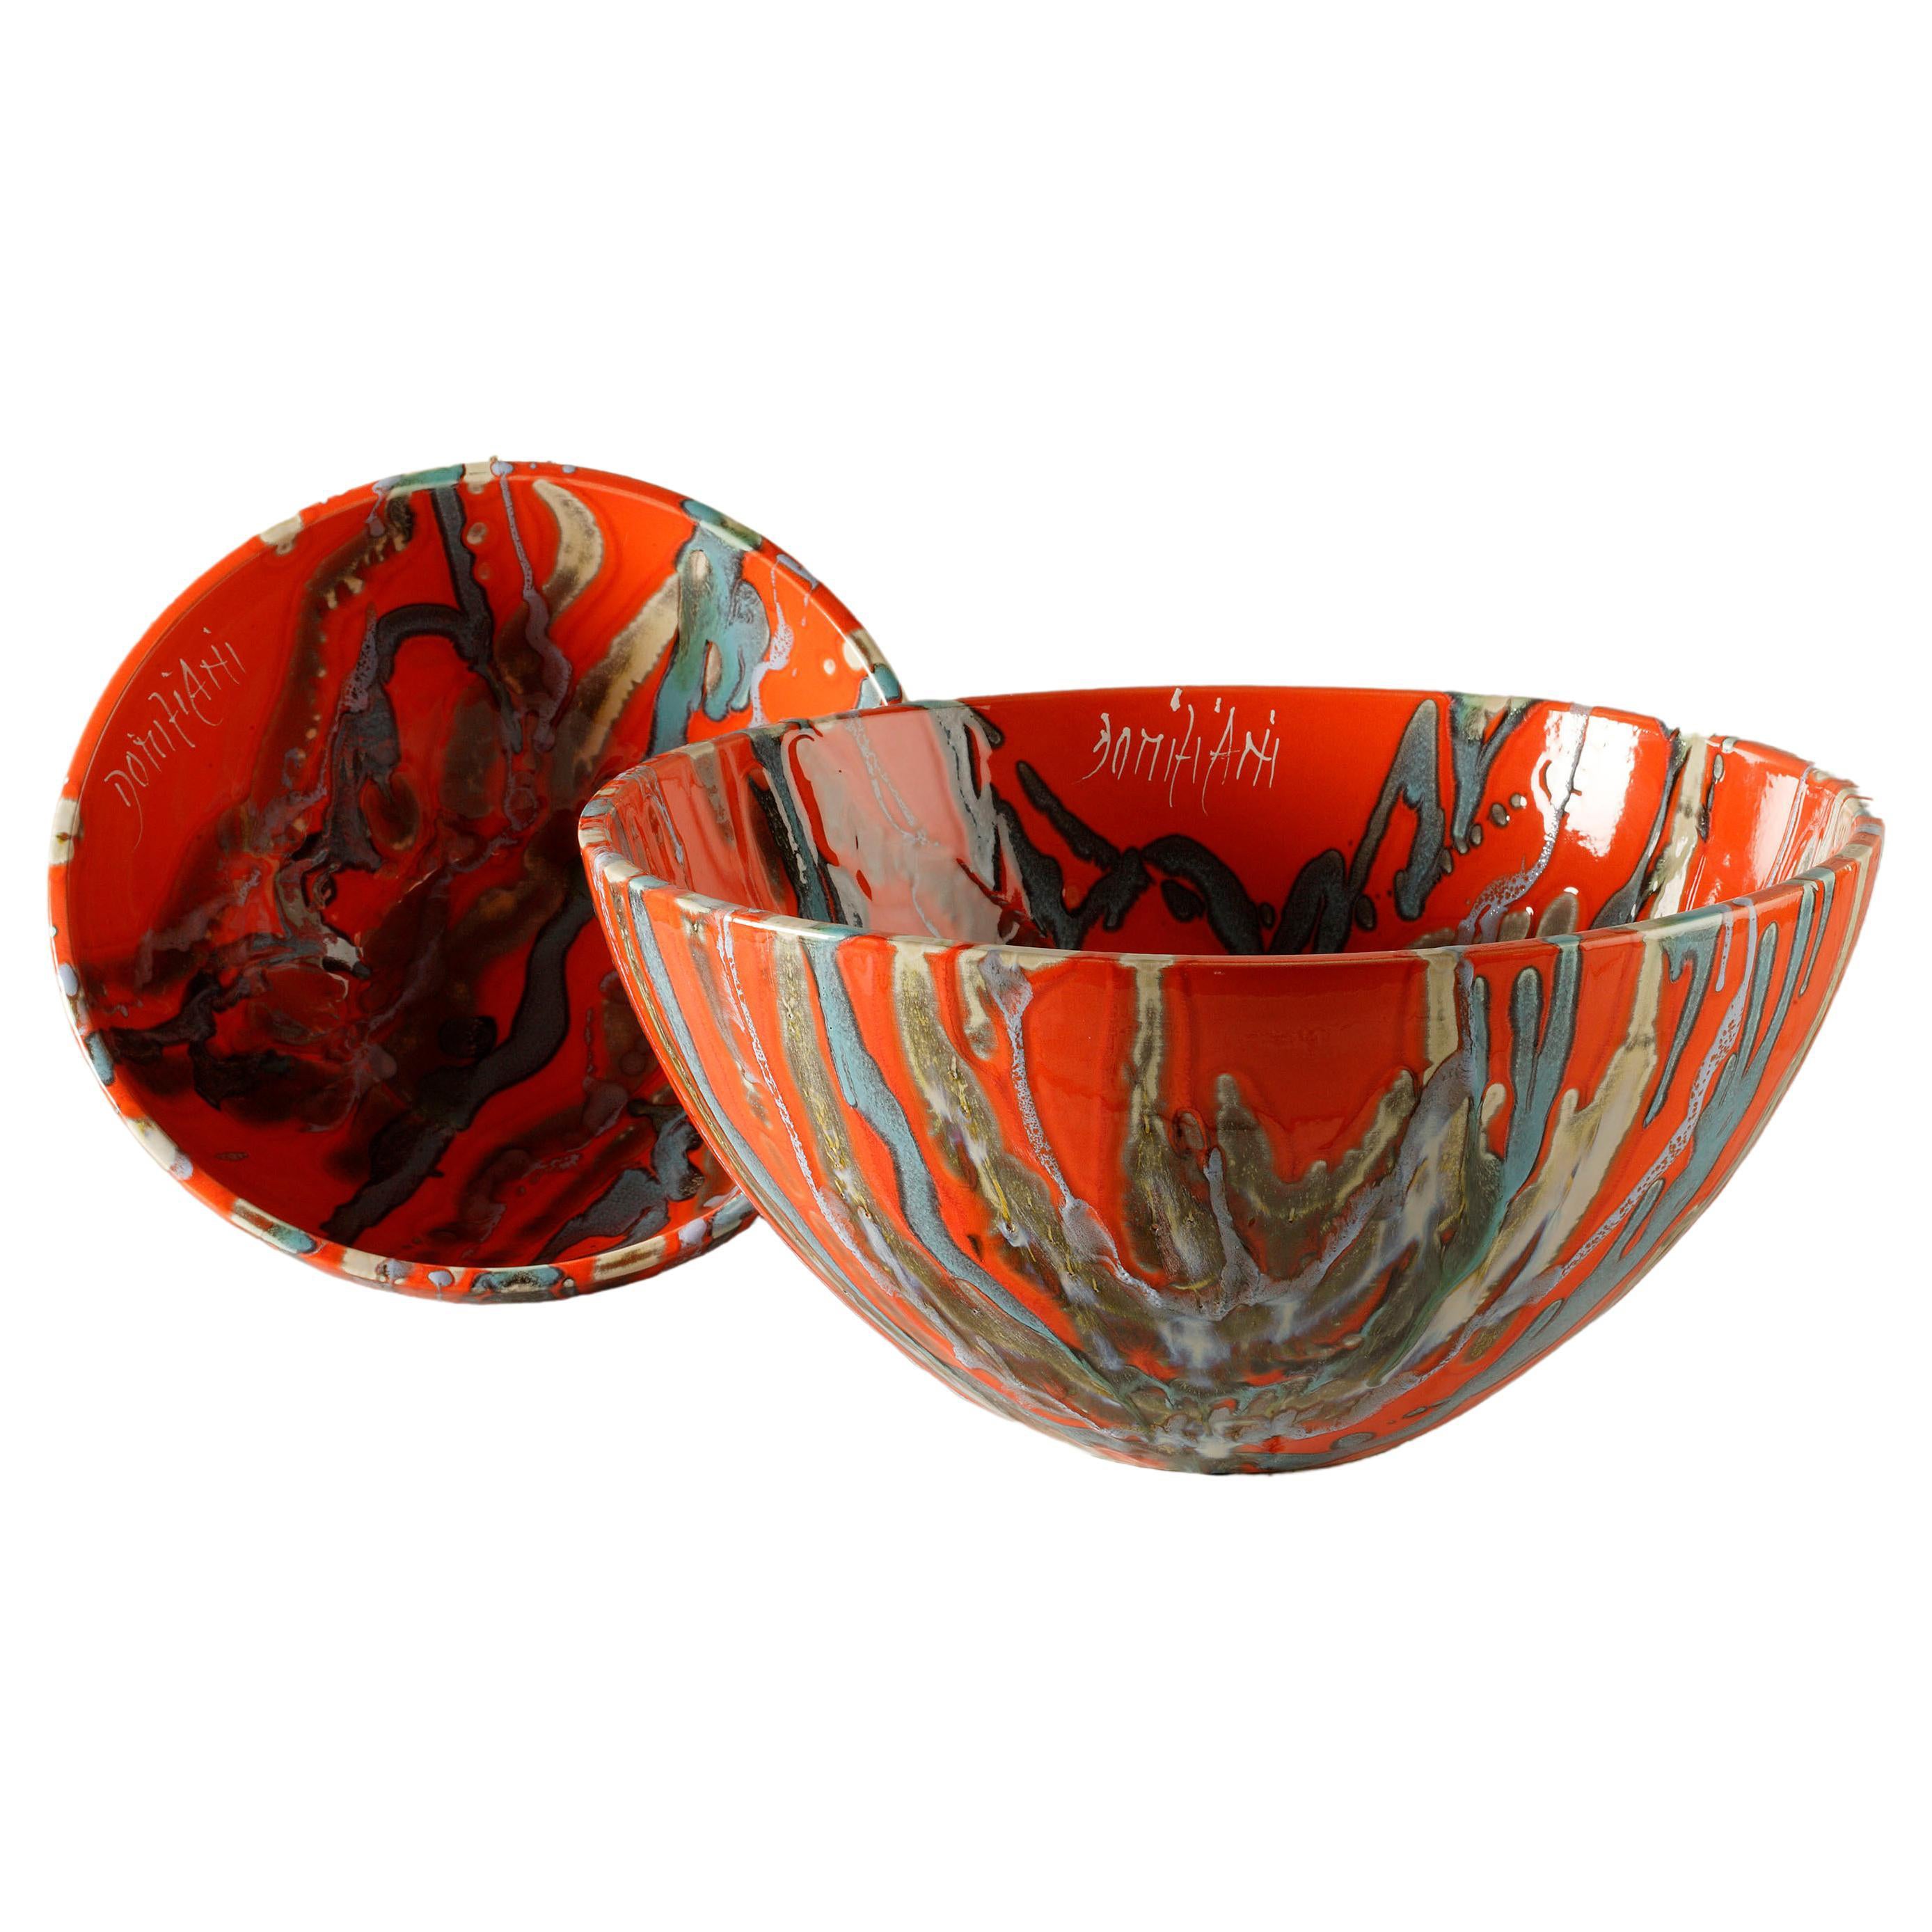 Ceramic Salad Bowl Ø 30cm x H 14cm, Handmade in Italy 2021, Choose Your Pattern